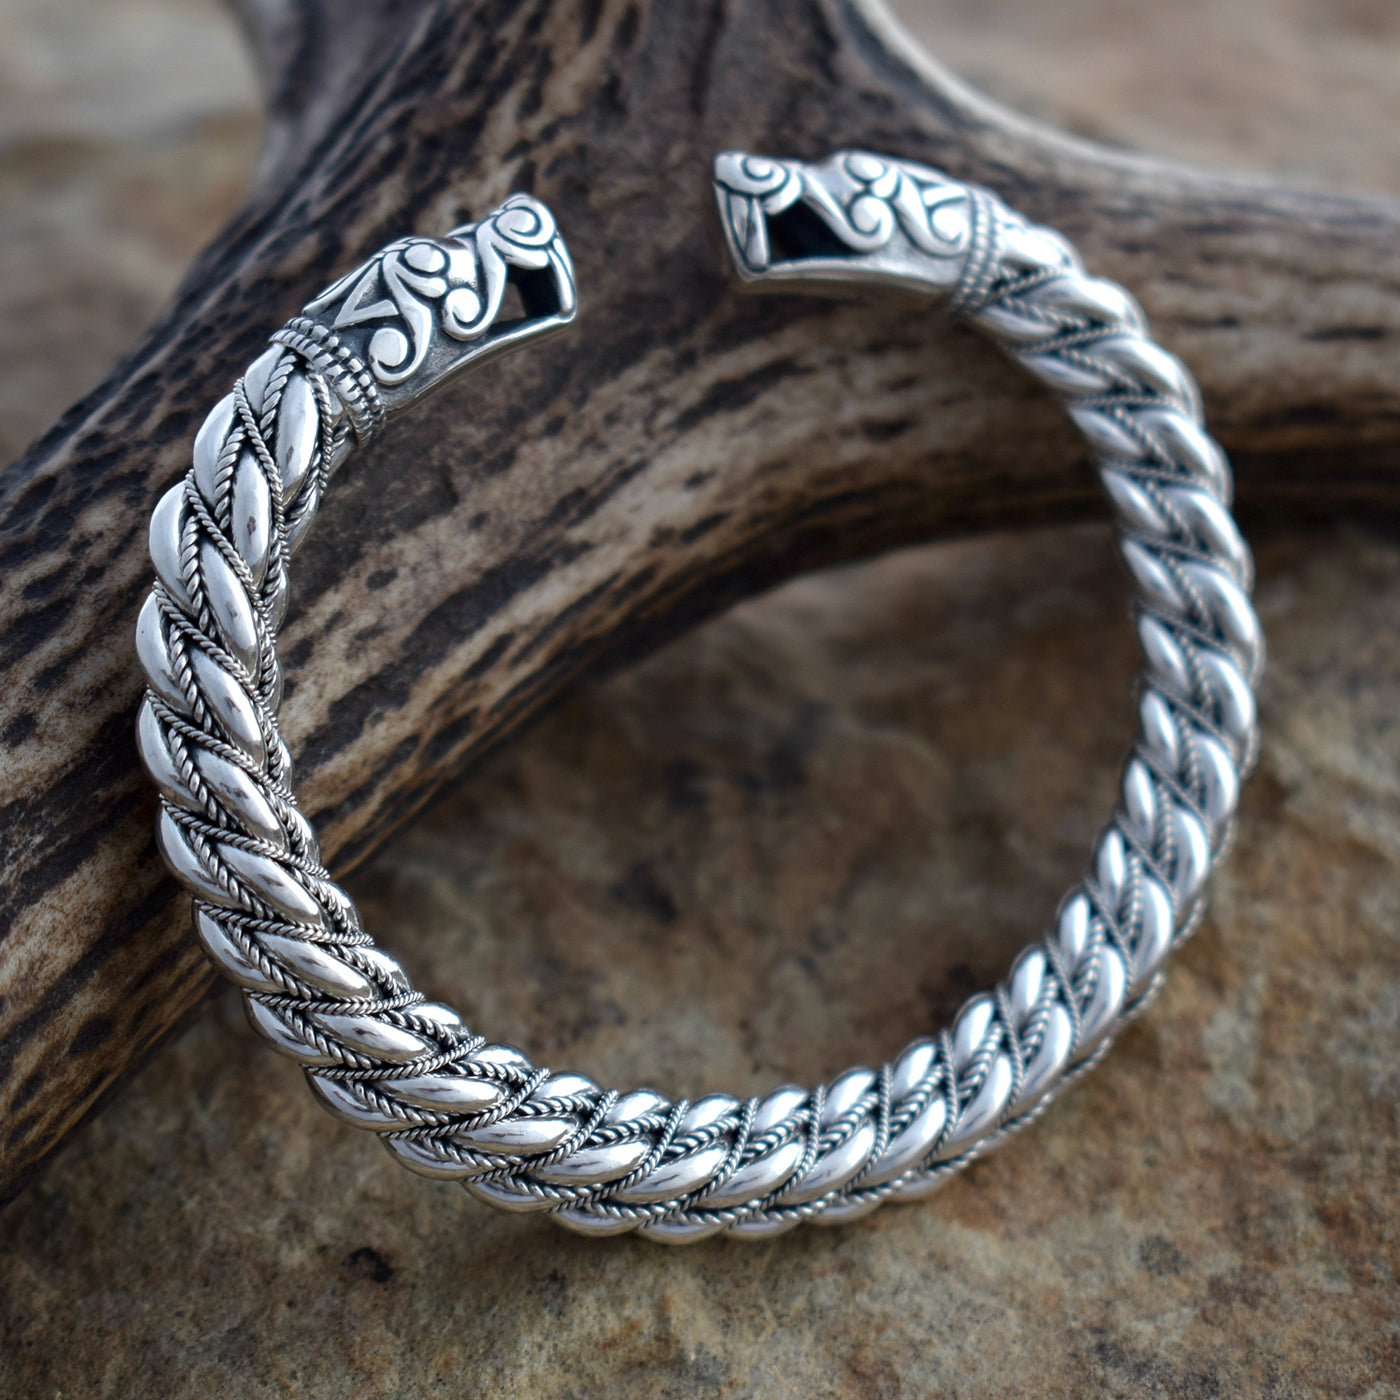 Viking arm ring oath ring Bear Björn bracelet armband viking jewelry Men  Gifts | eBay